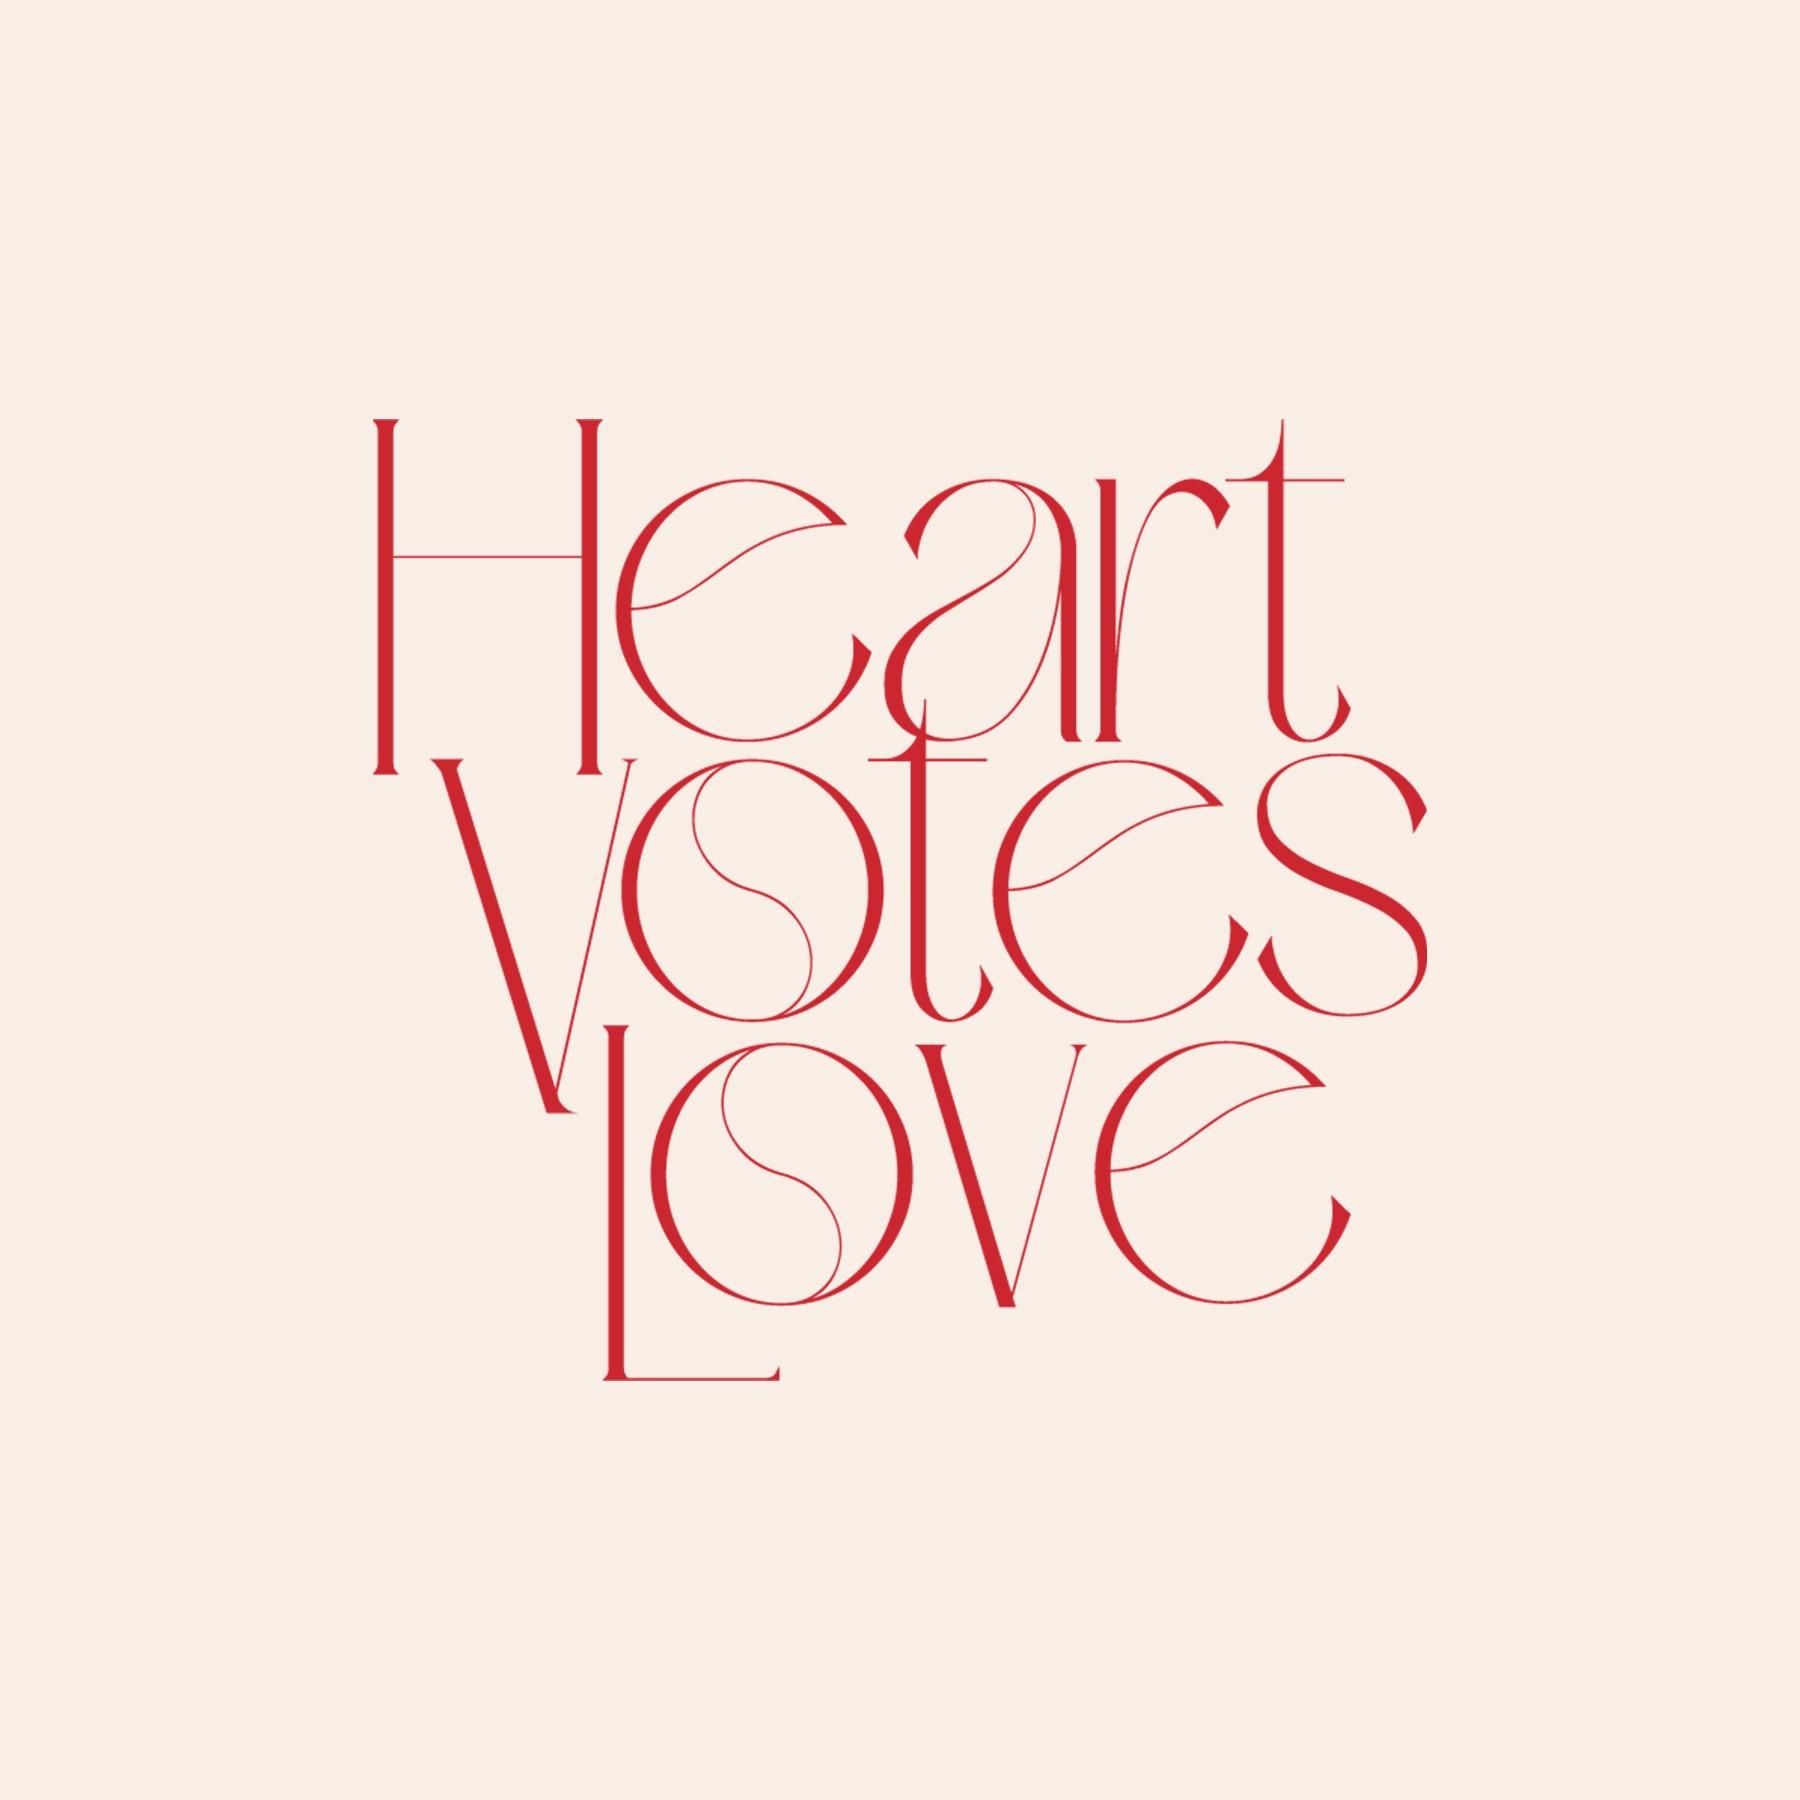 Heart Votes Love